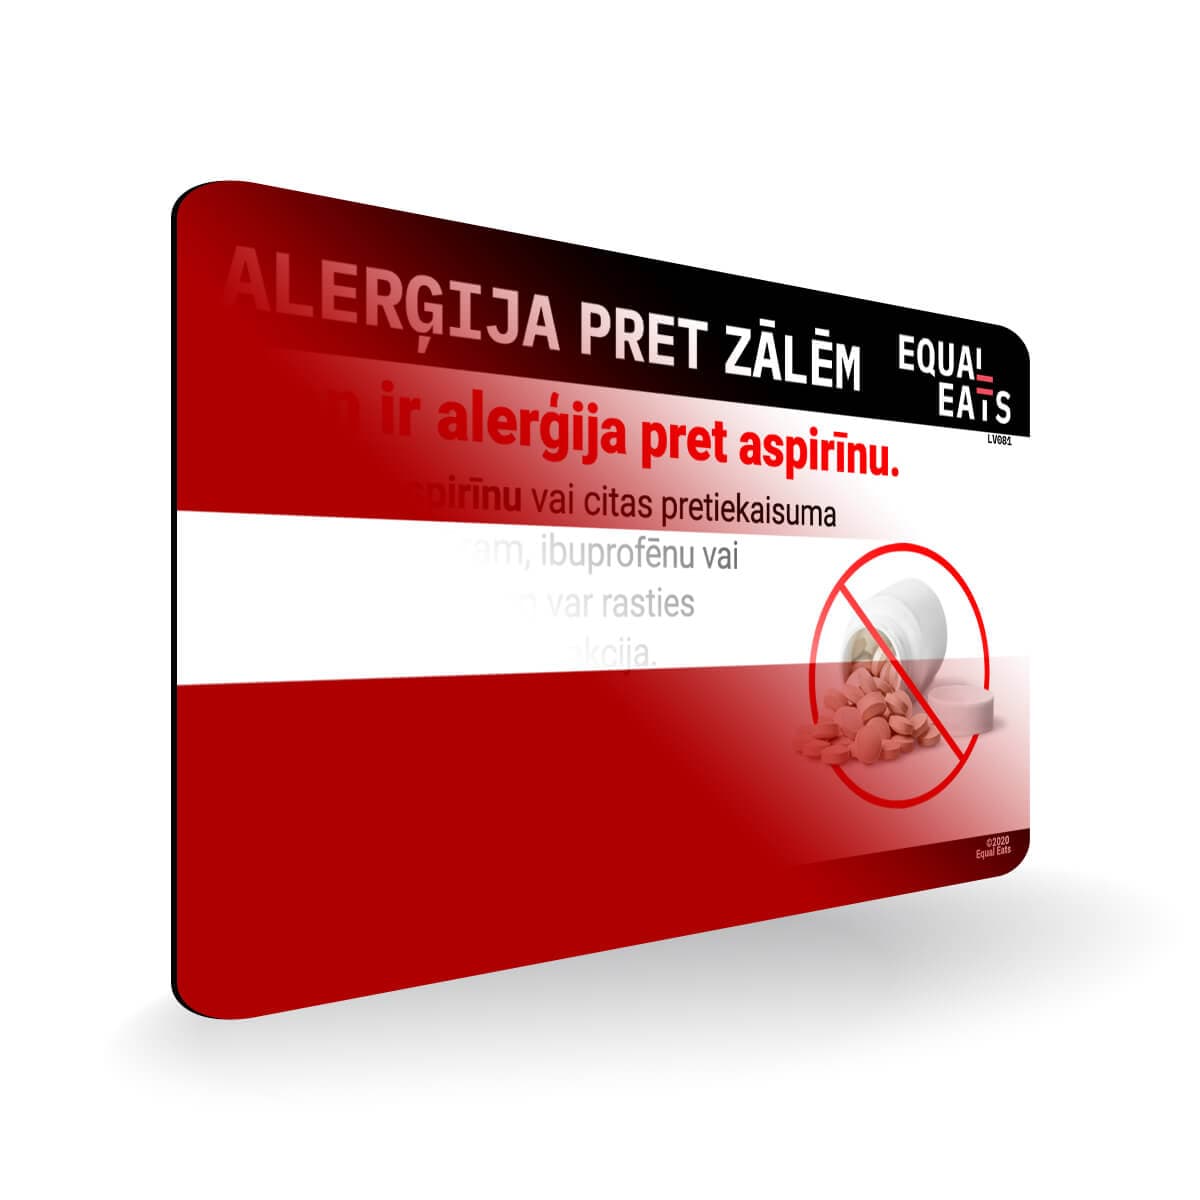 Aspirin Allergy in Latvian. Aspirin medical I.D. Card for Latvia